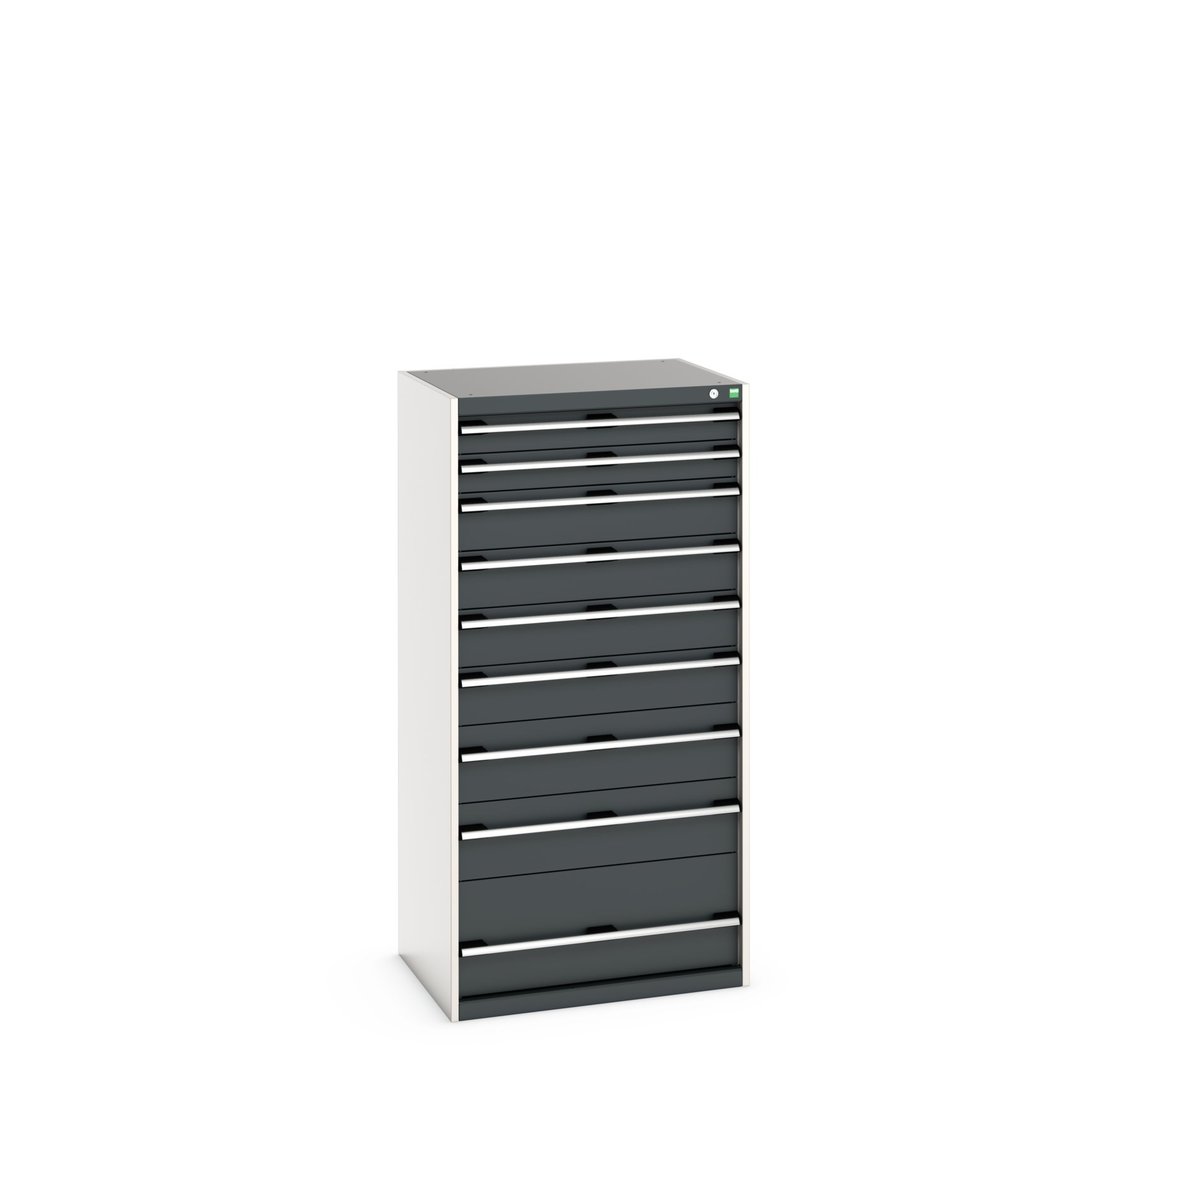 40020067. - cubio drawer cabinet